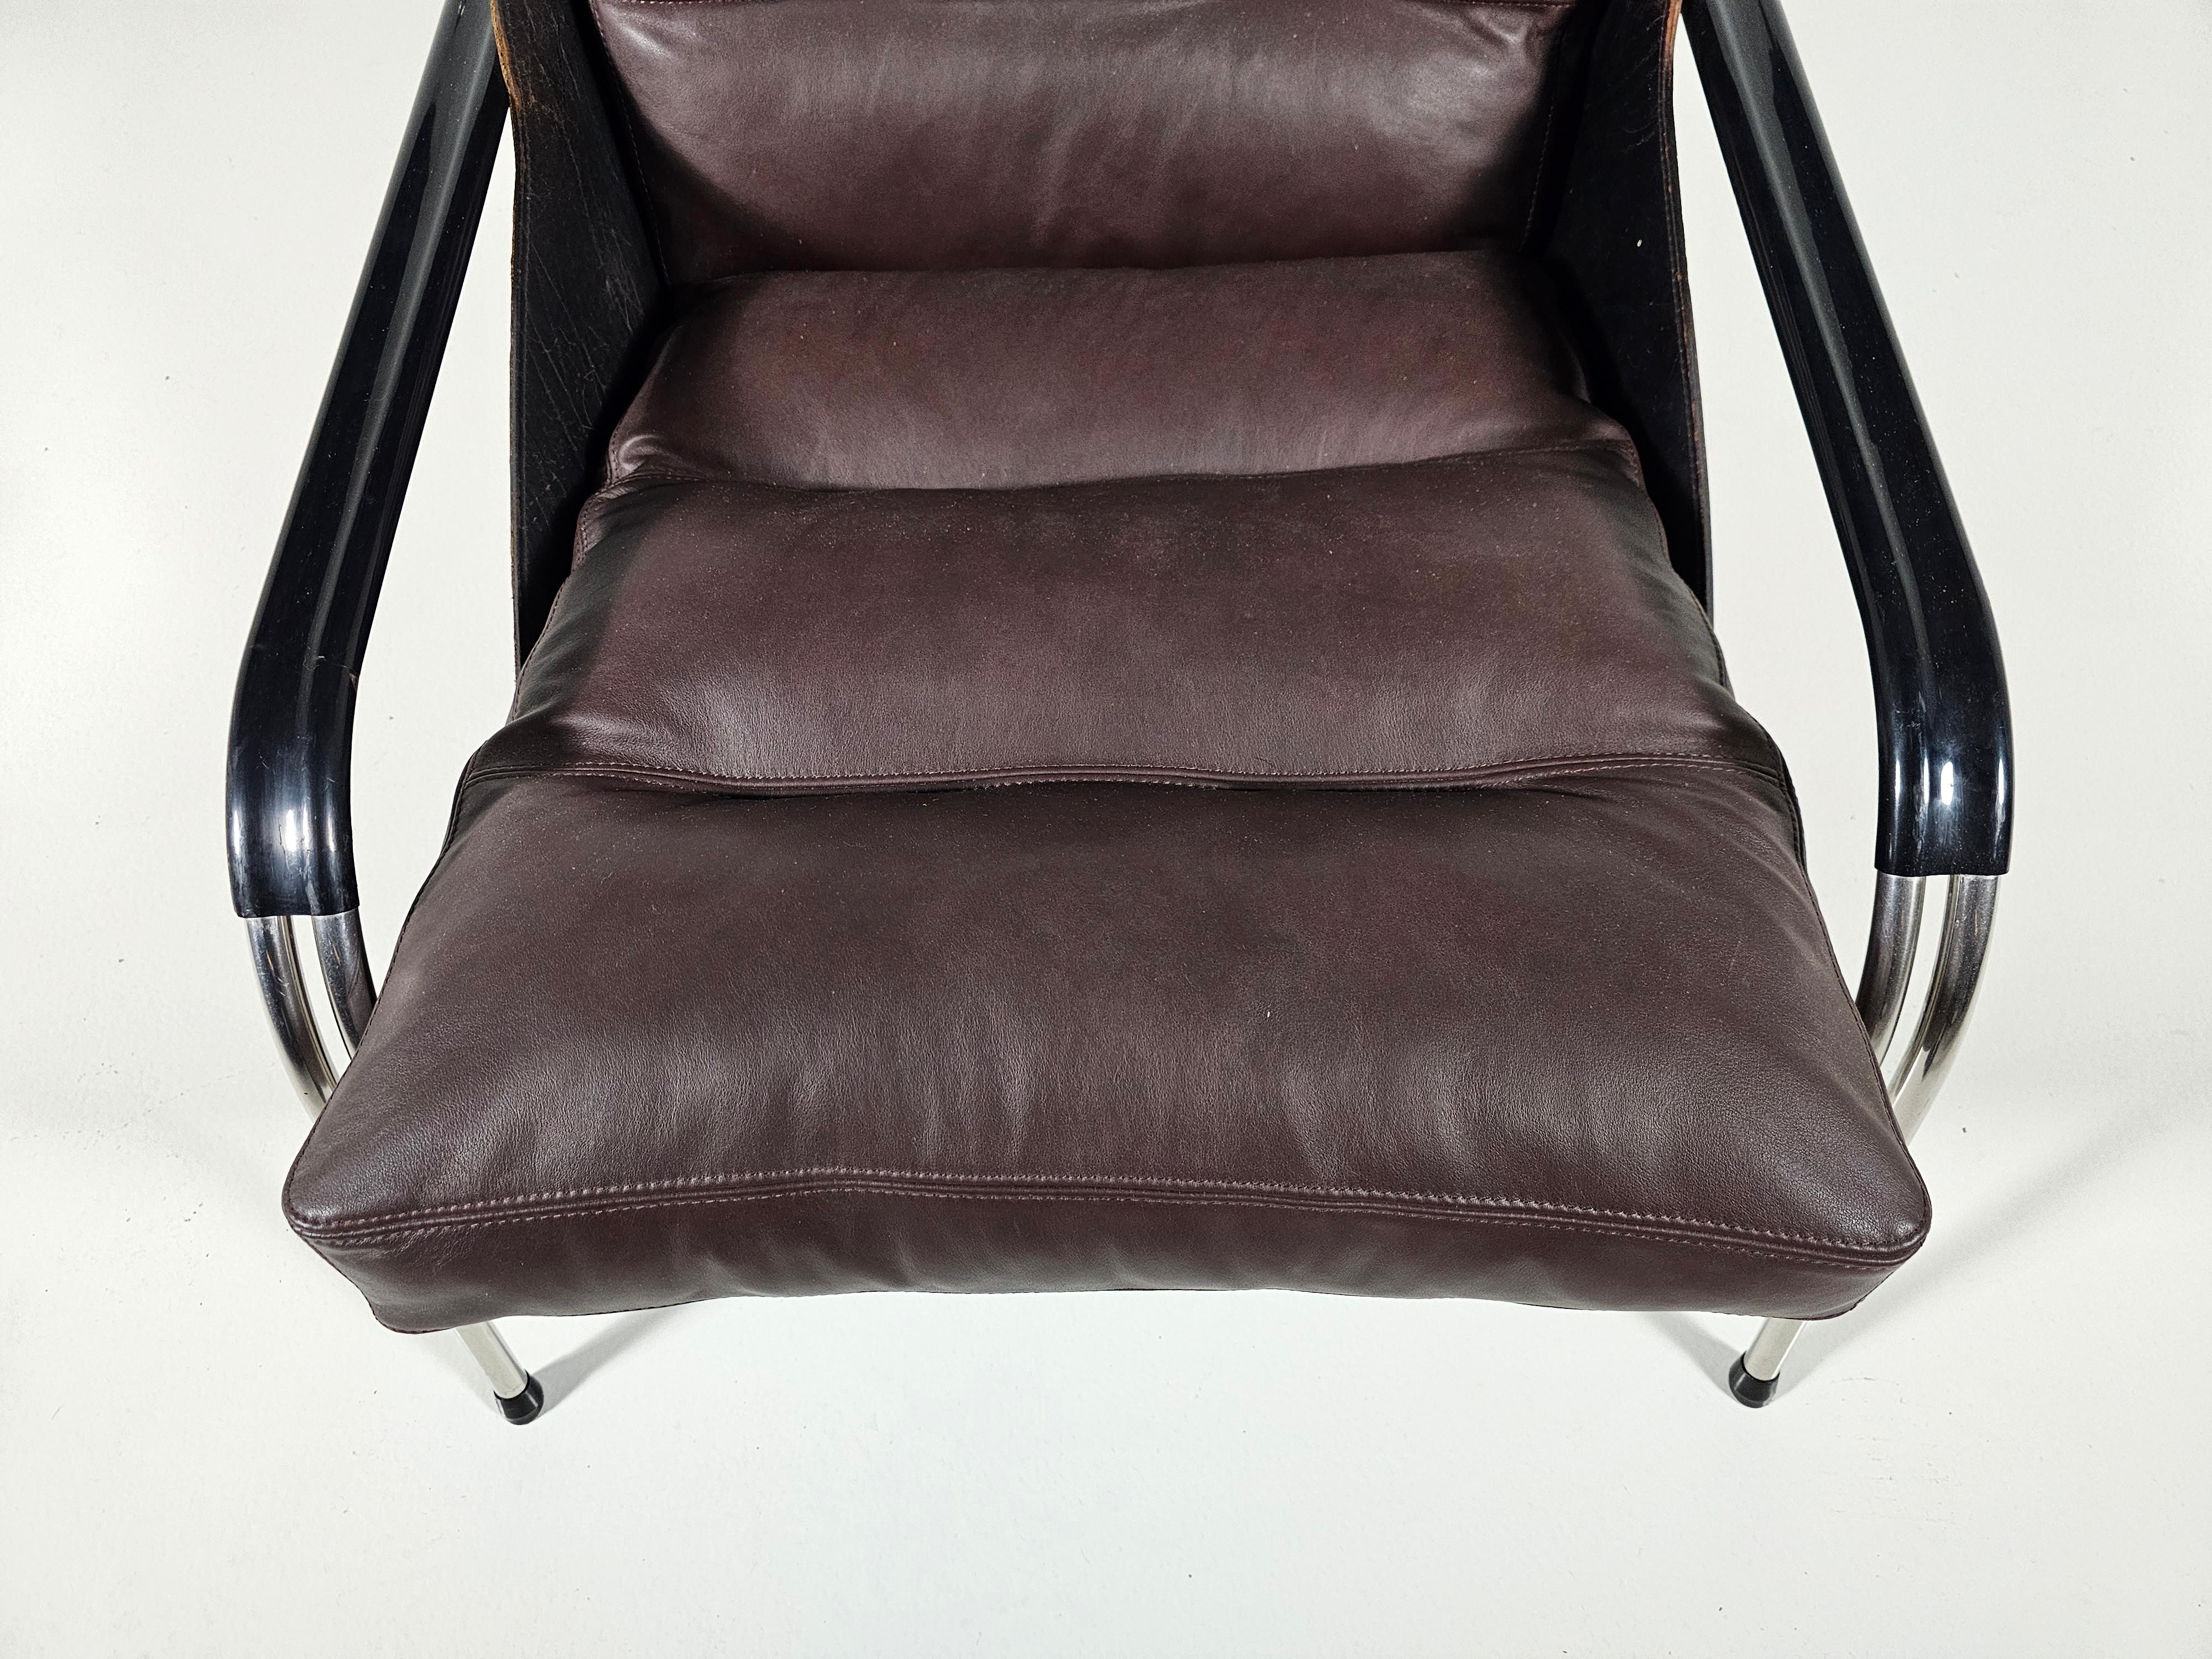 Steel  Marco Zanuso Maggiolina lounge chairs in brown and black leather, Zanotta, 1950